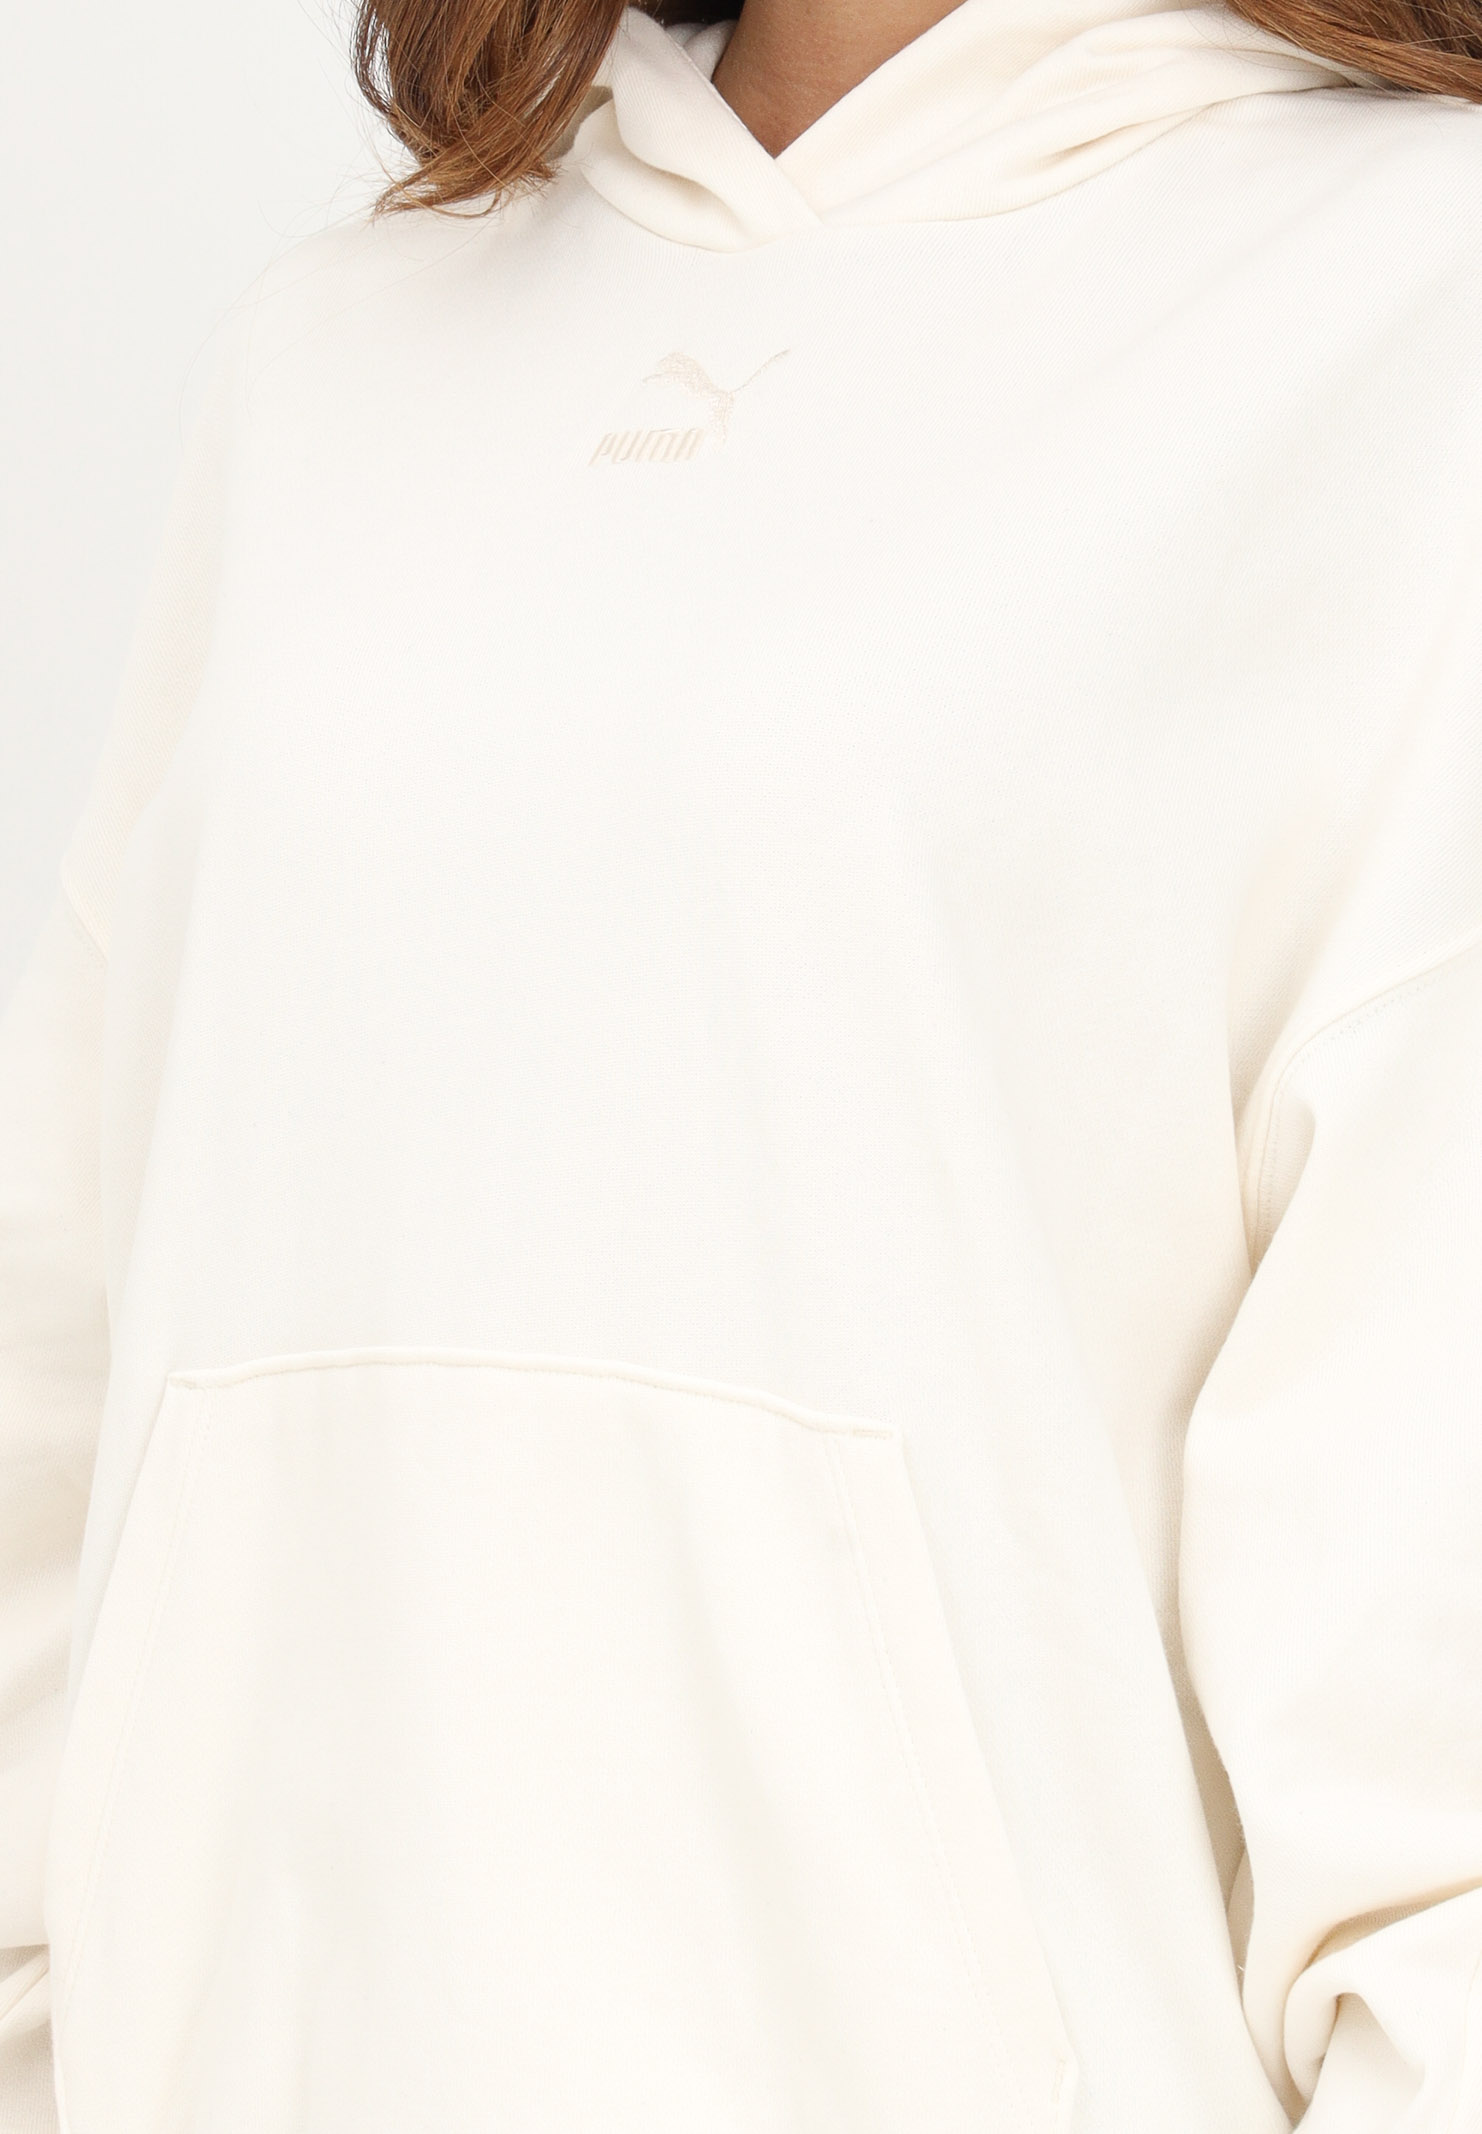 White women's sweatshirt with hood and logo embroidery PUMA | 53568499